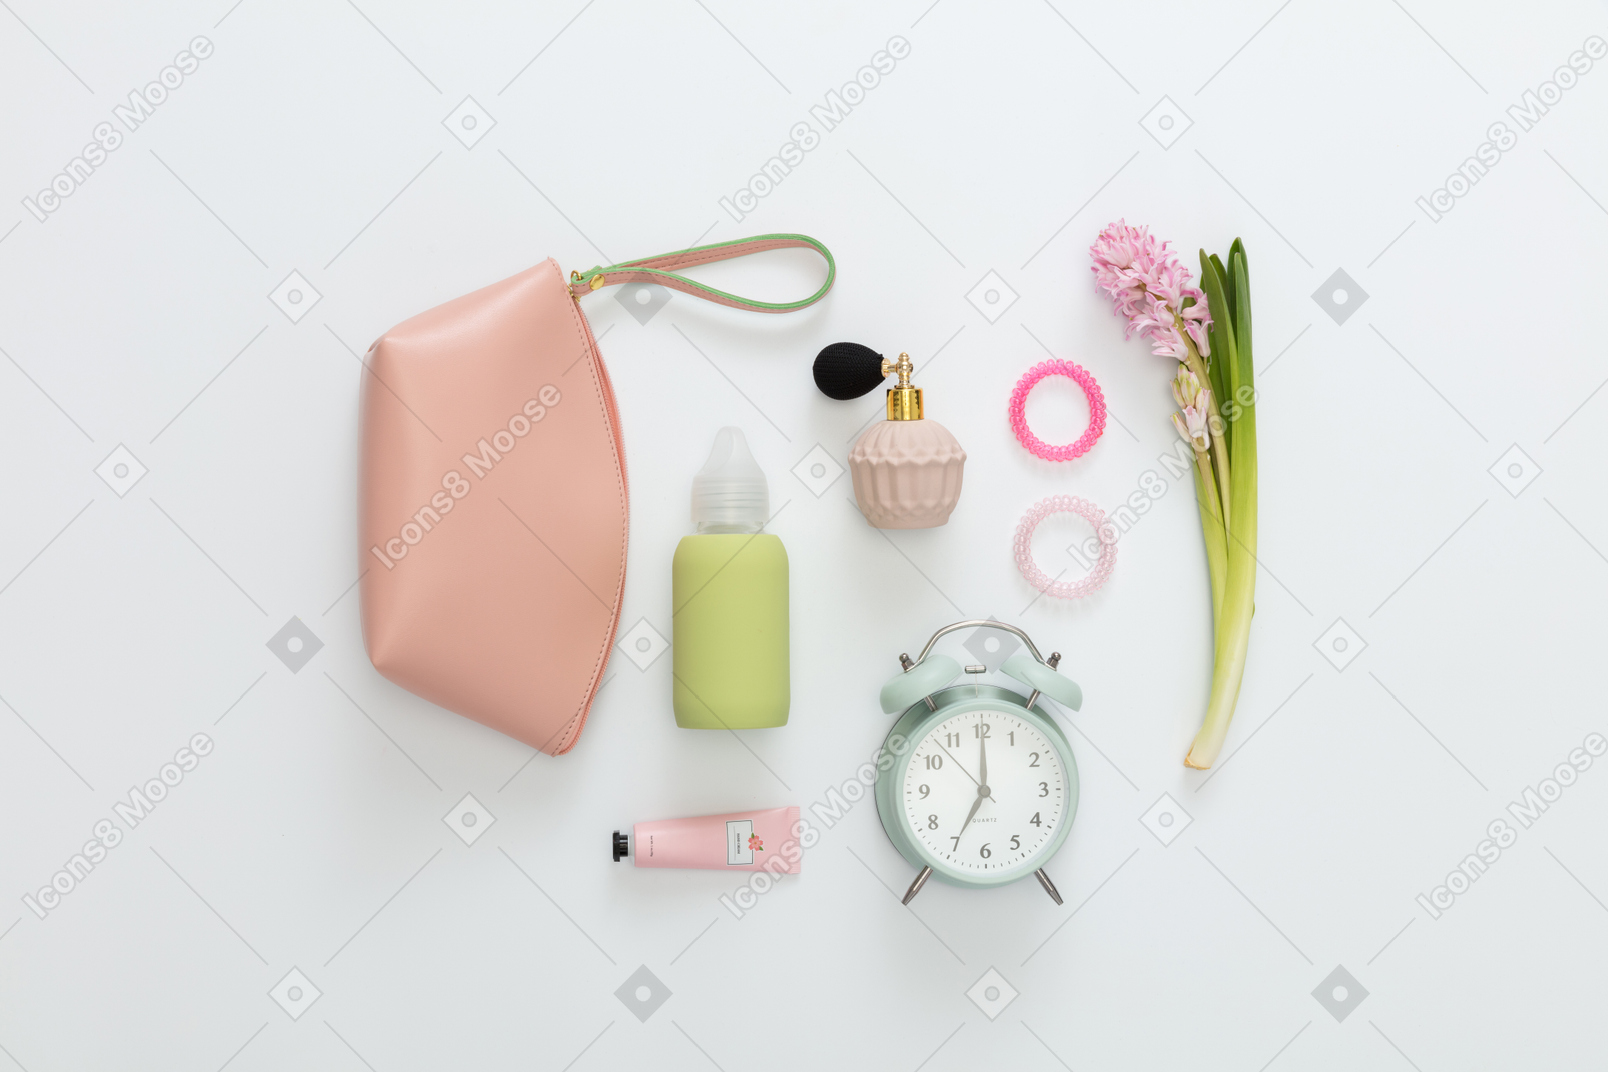 Female accessories